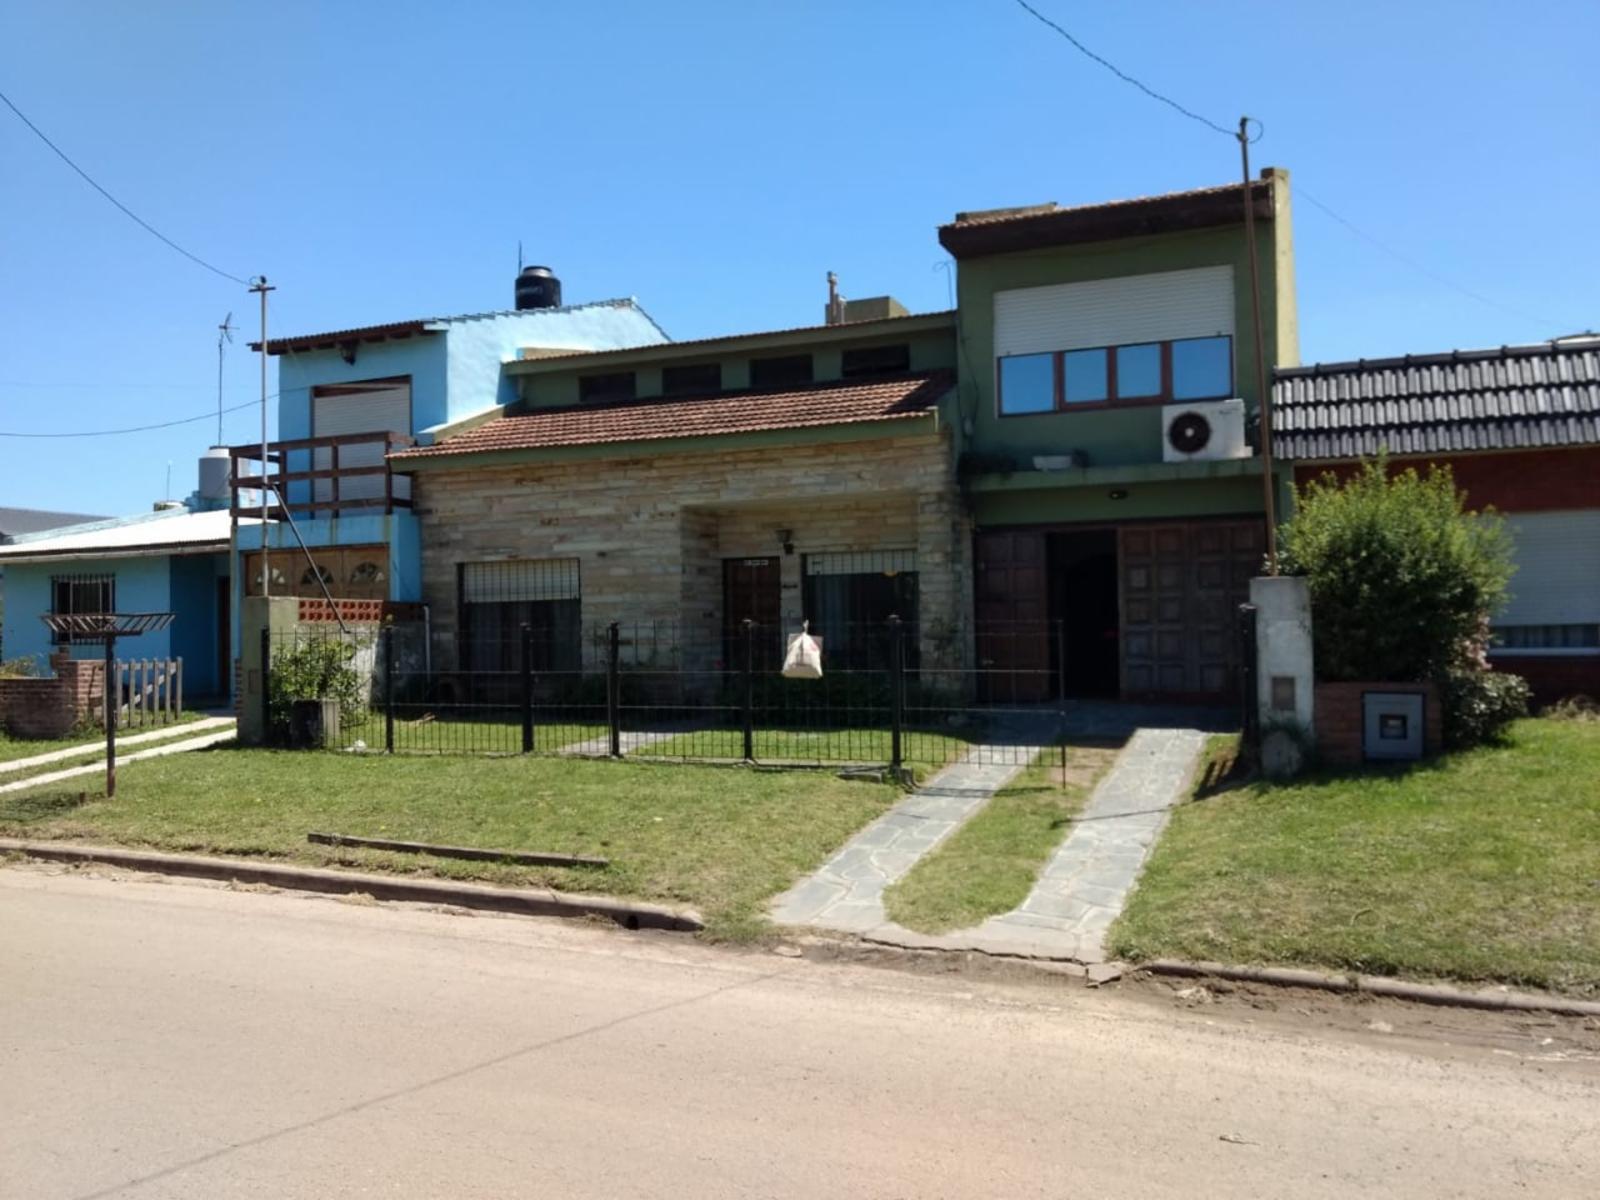 Vendo Casa Mar del Plata -Ideal 2 familias